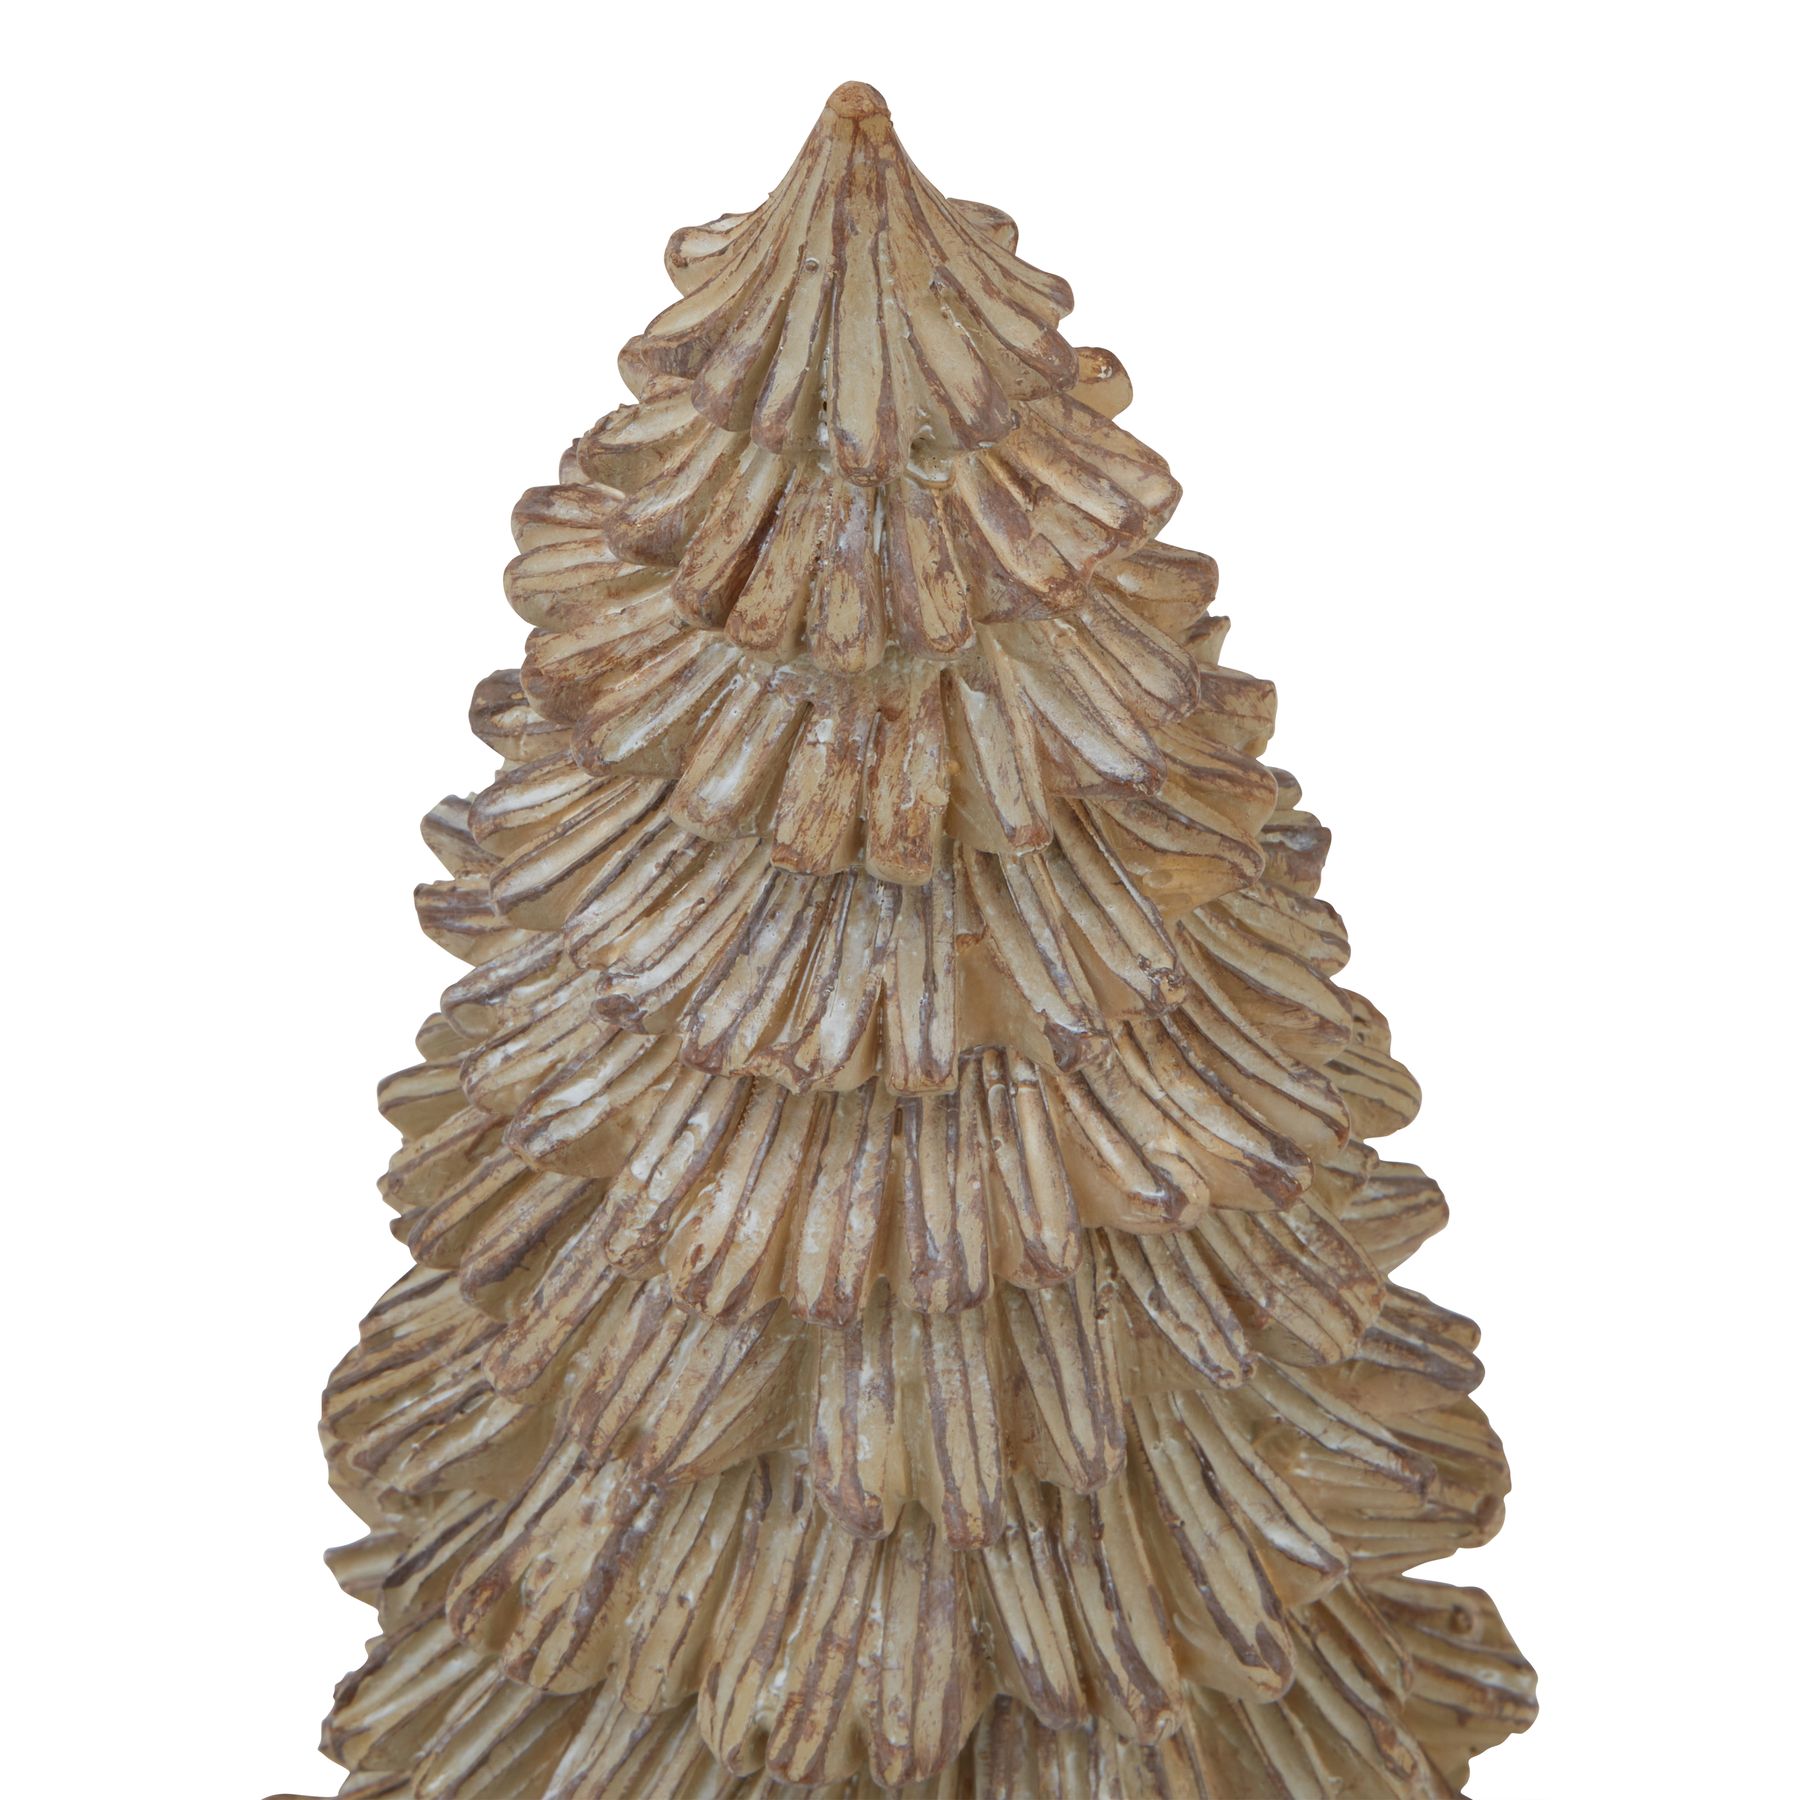 Medium Pine Tree Sculpture - Image 2